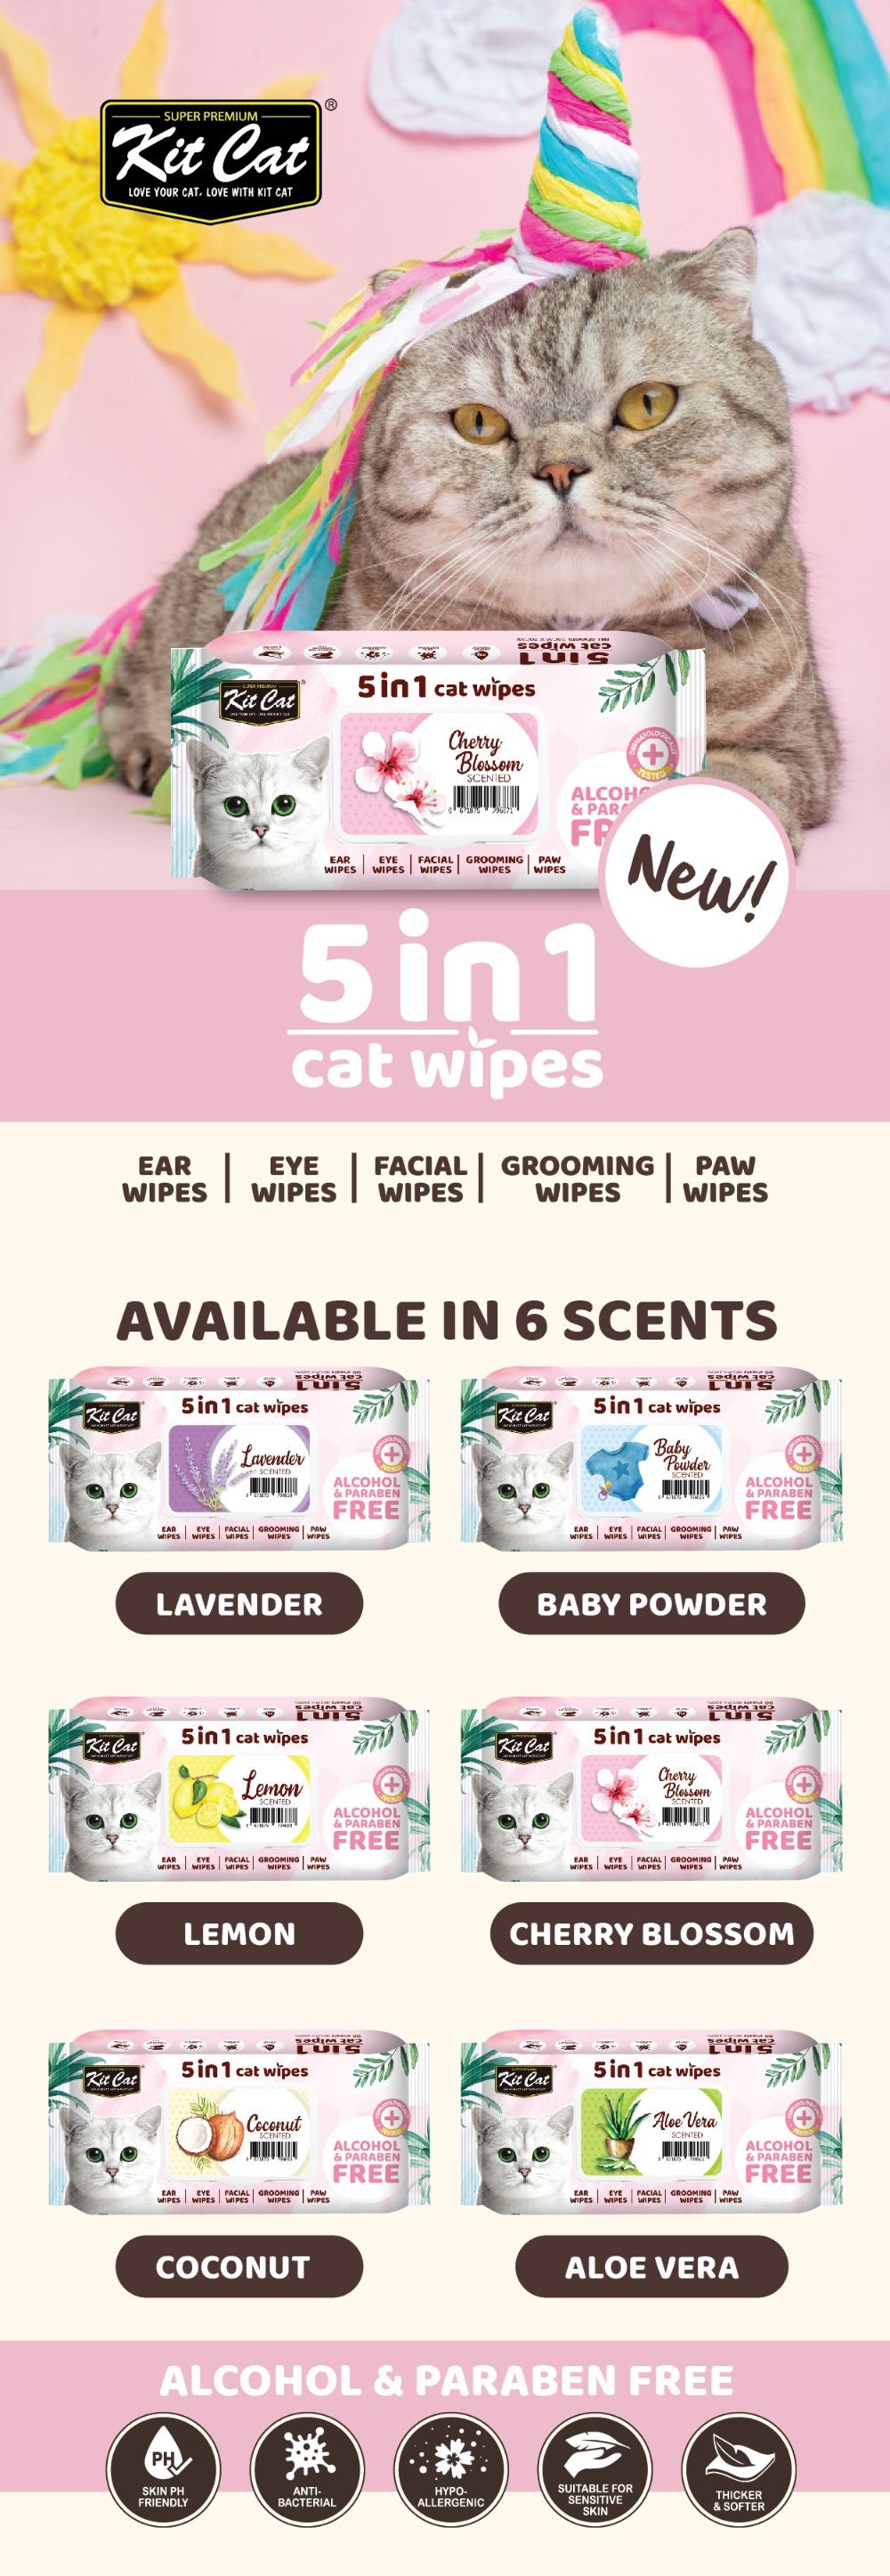 [CTN OF 12] Kit Cat 5 in 1 Cat Wipes - Lavender (12x80pcs) | Paraben & Alcohol Free